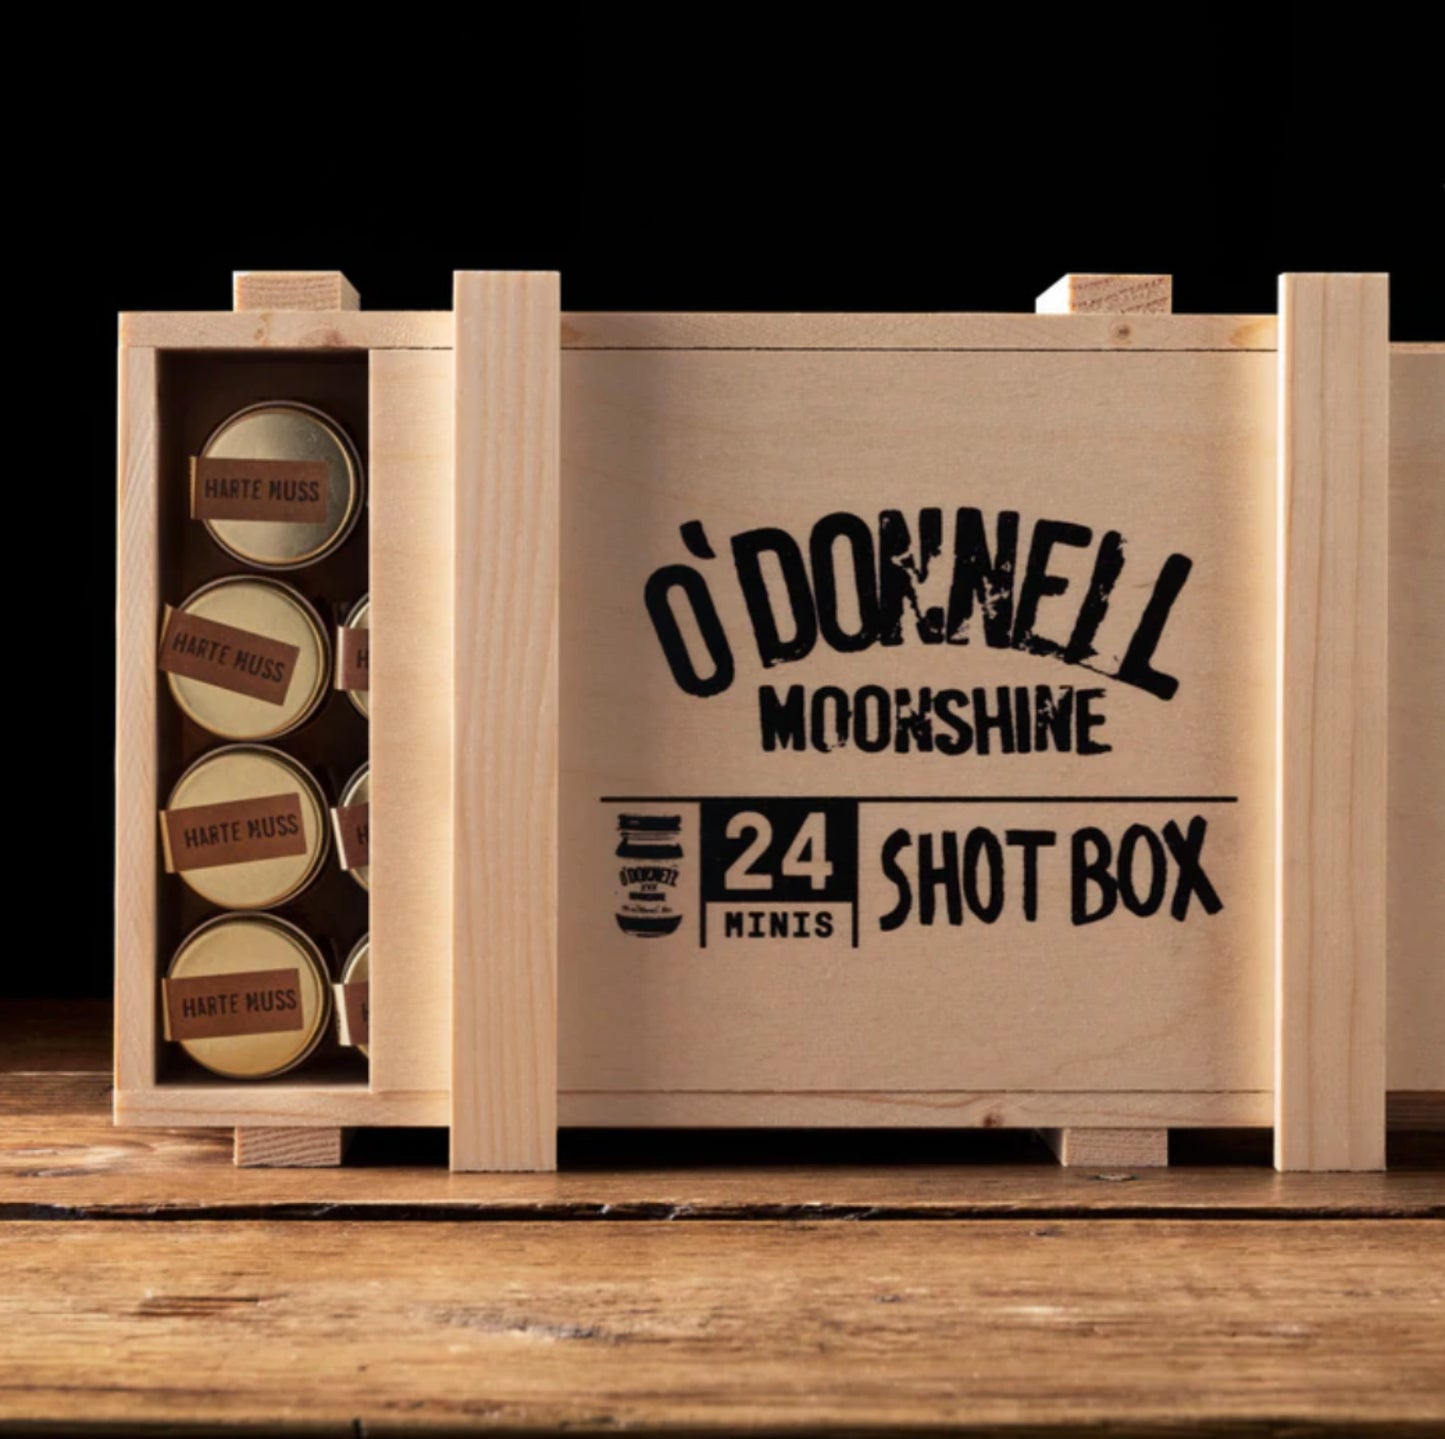 O'Donnell Moonshine shot box 24 minis